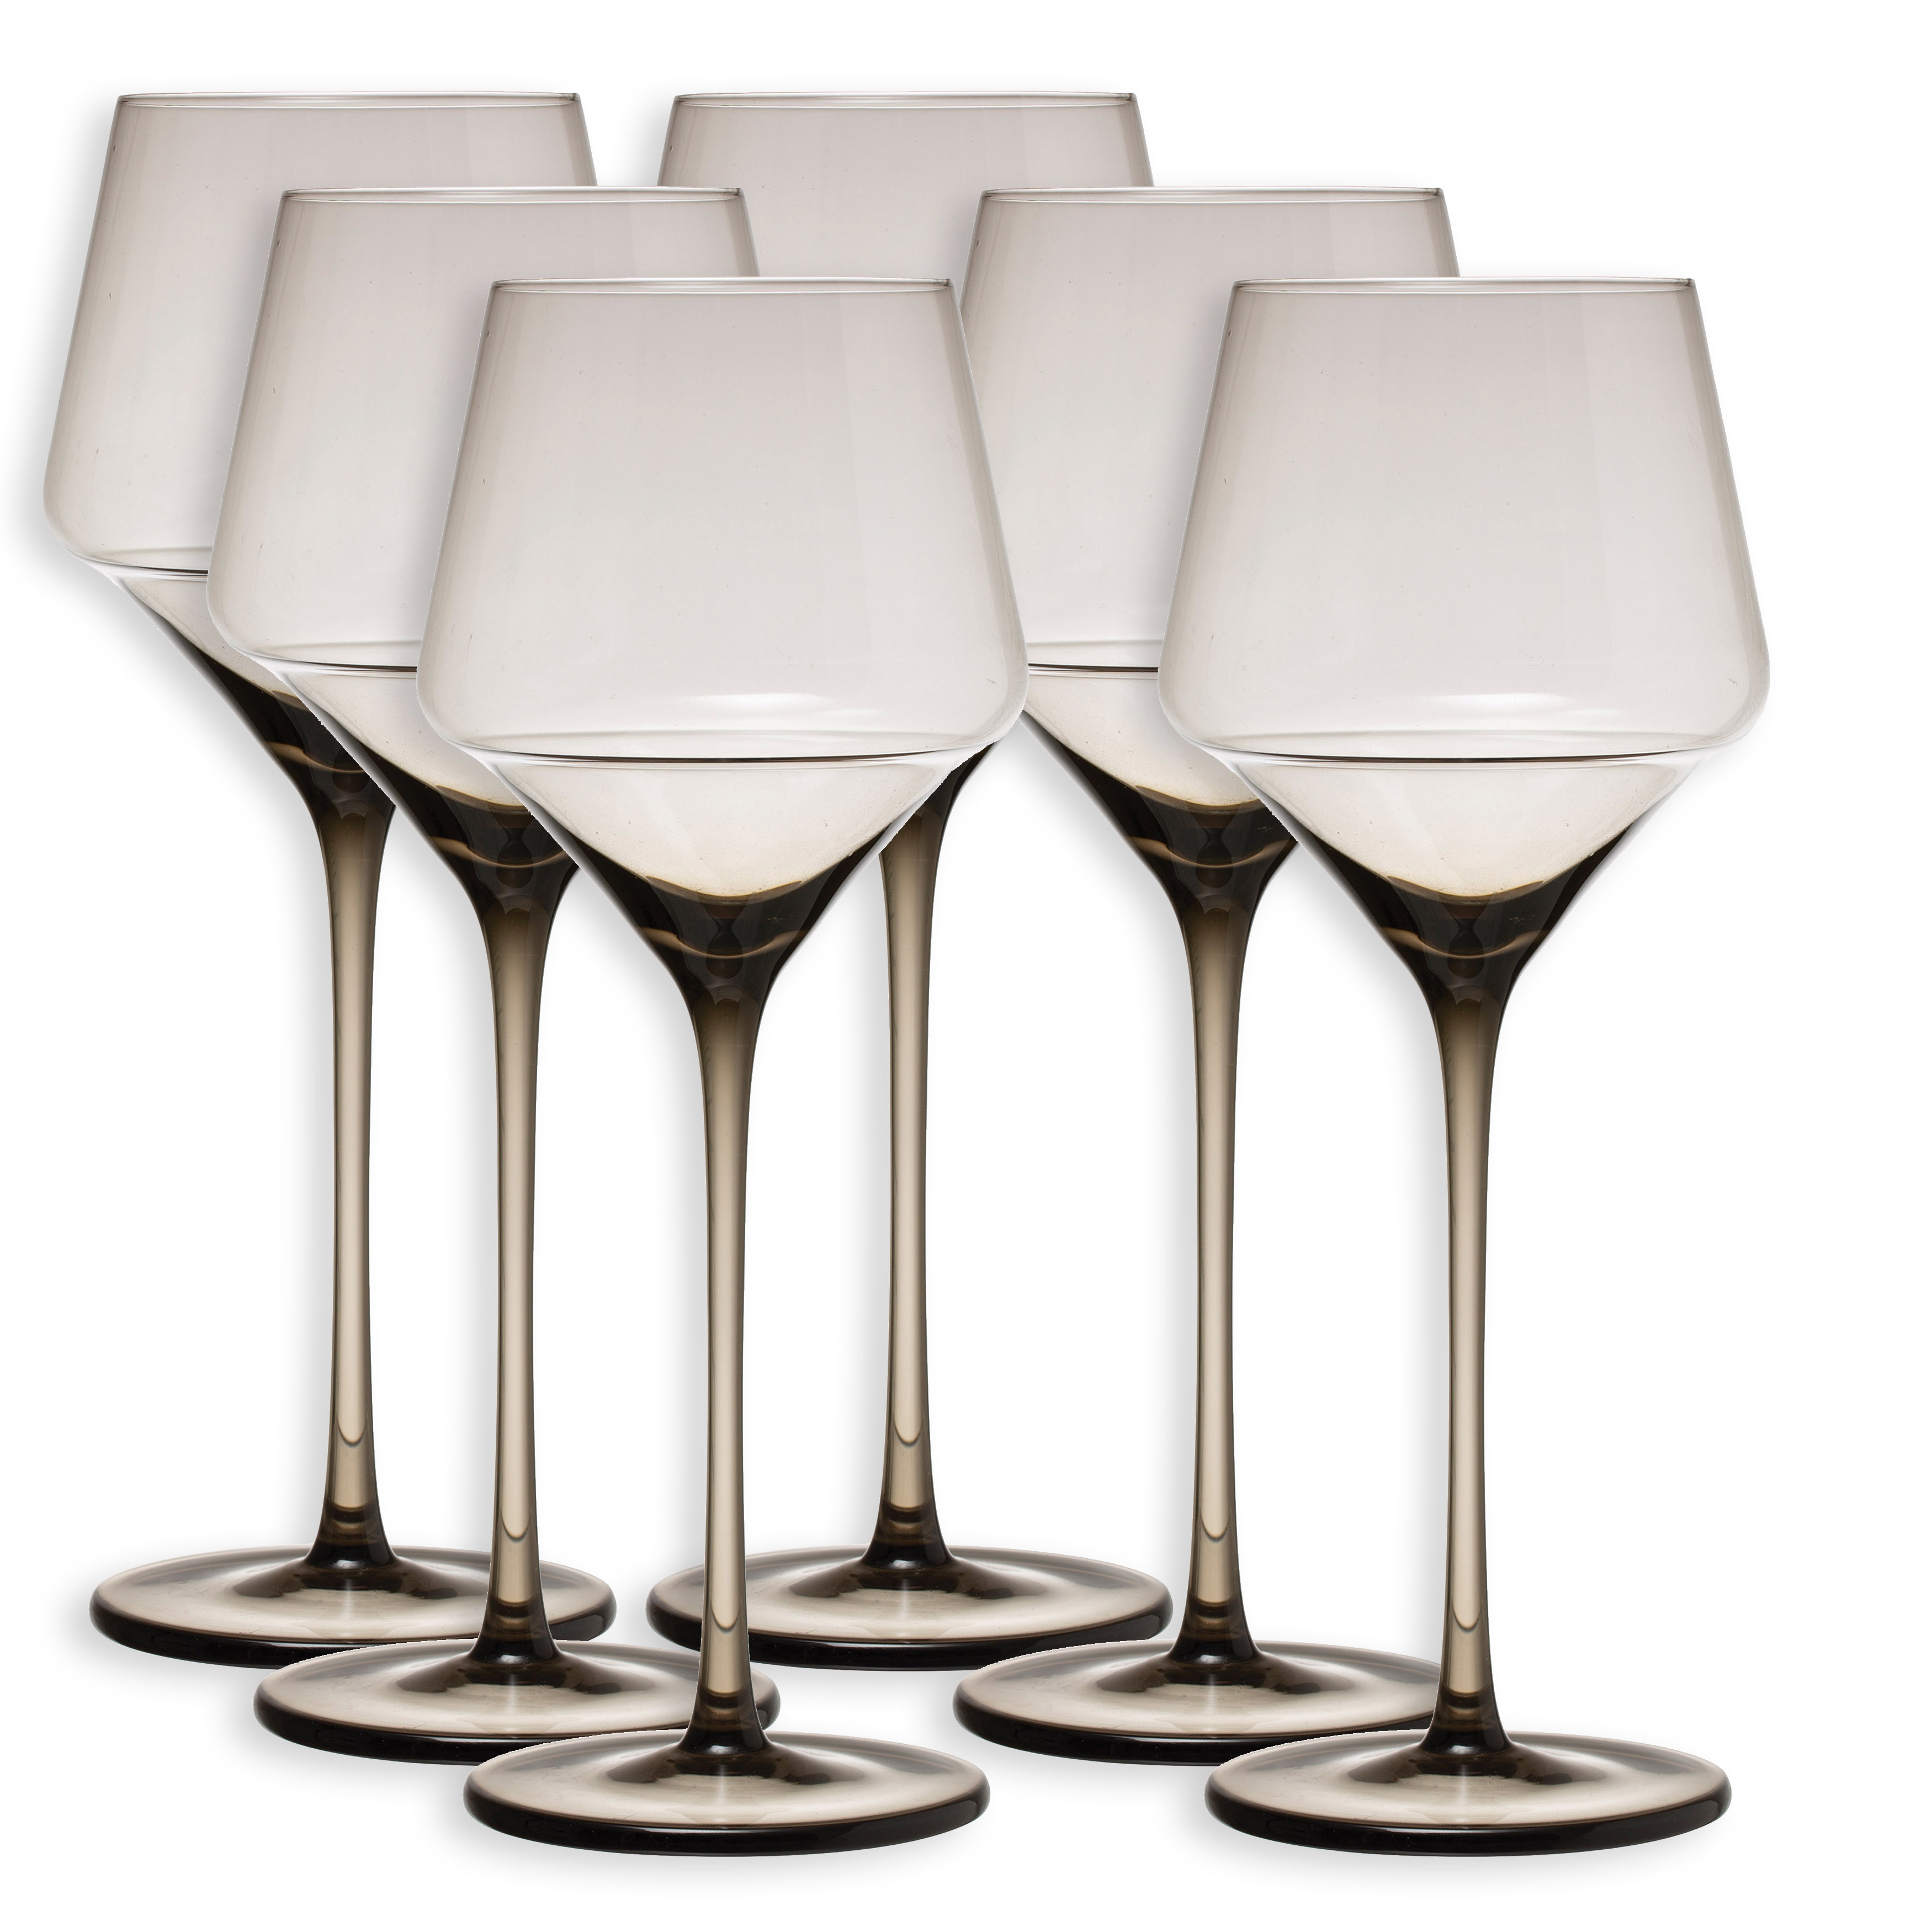 Long Stem Wine Glass Set with Smokey Grey Clear Glass Finish, Set of 6 - Image 0